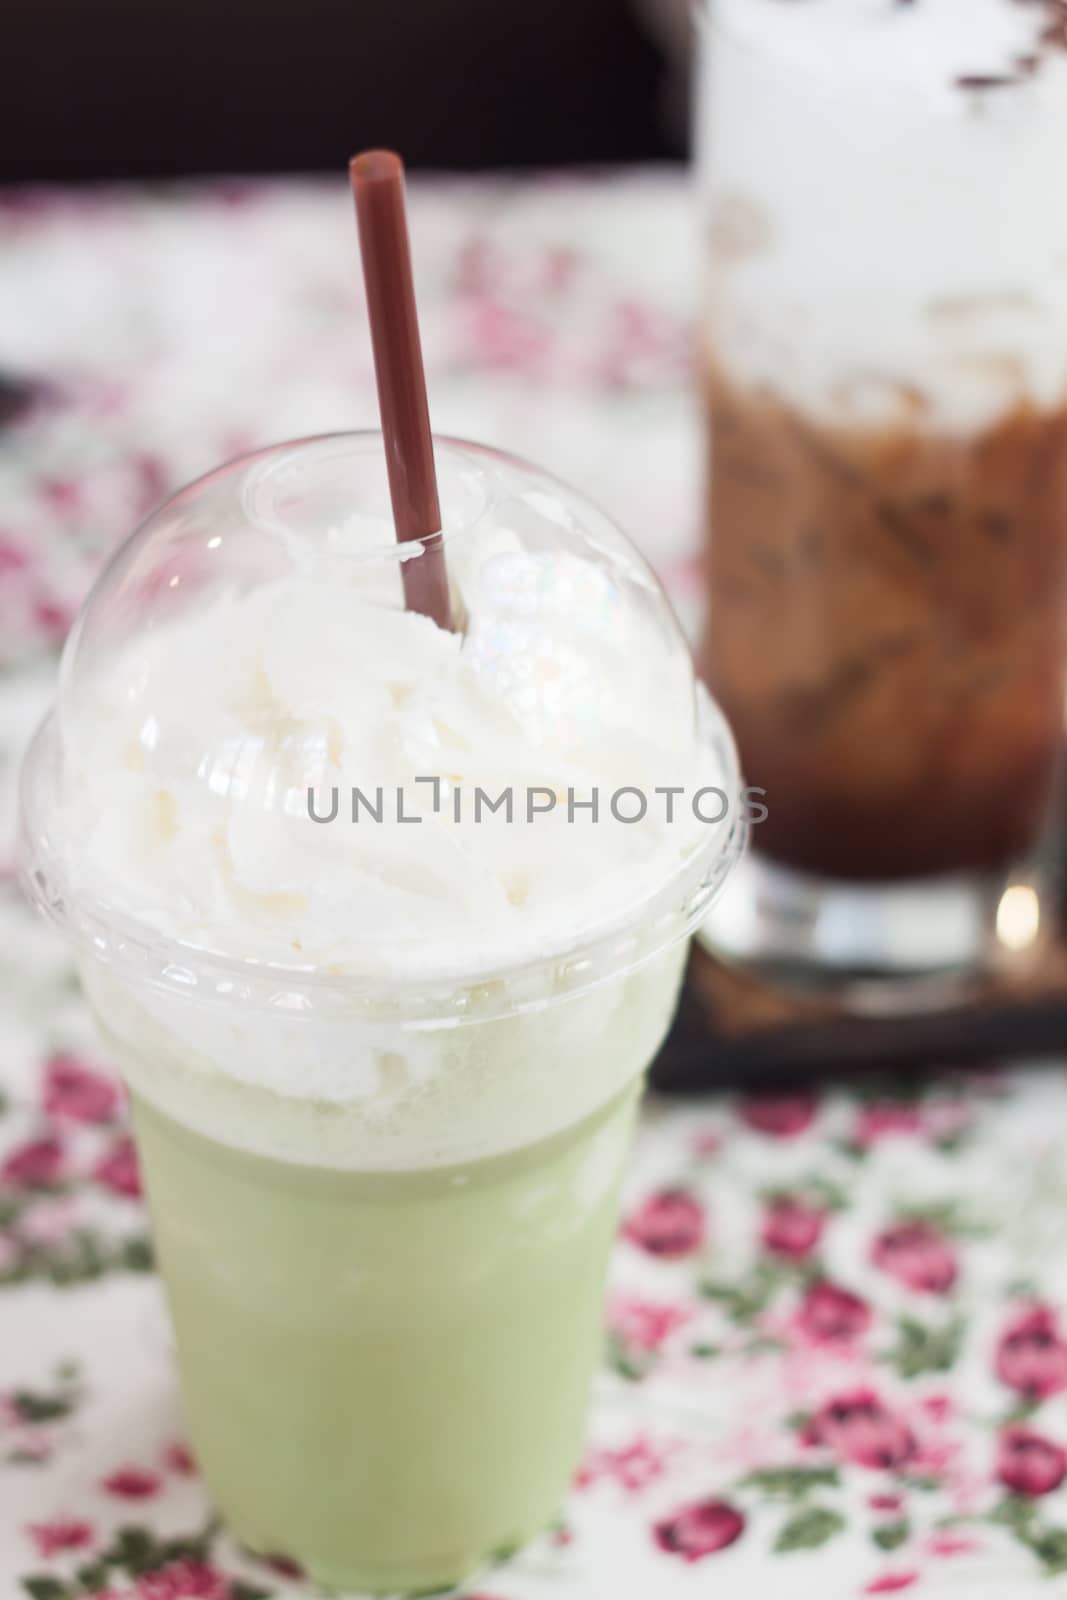 Macha green tea with whipped cream, stock photo